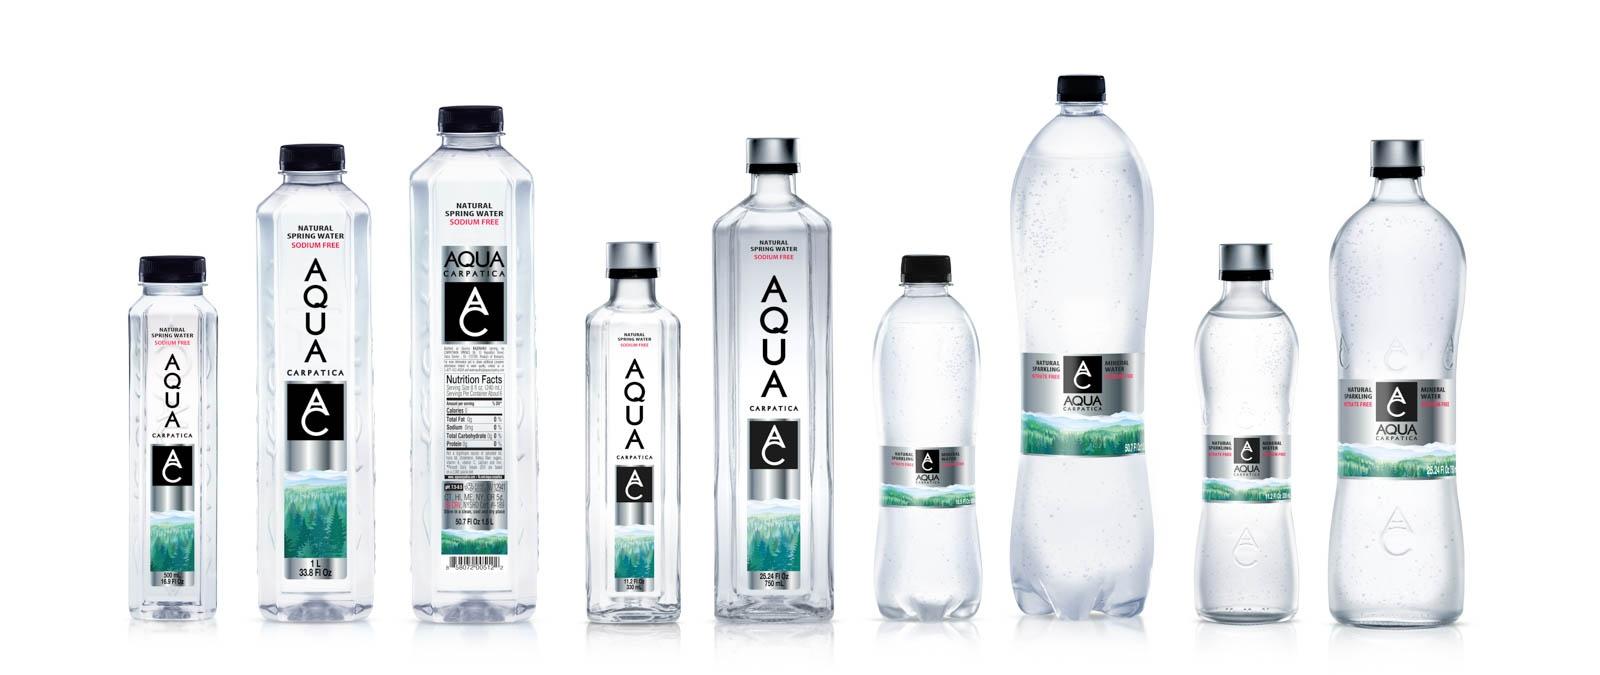 aqua carpatica water bottles - www.gklondon.co.uk.